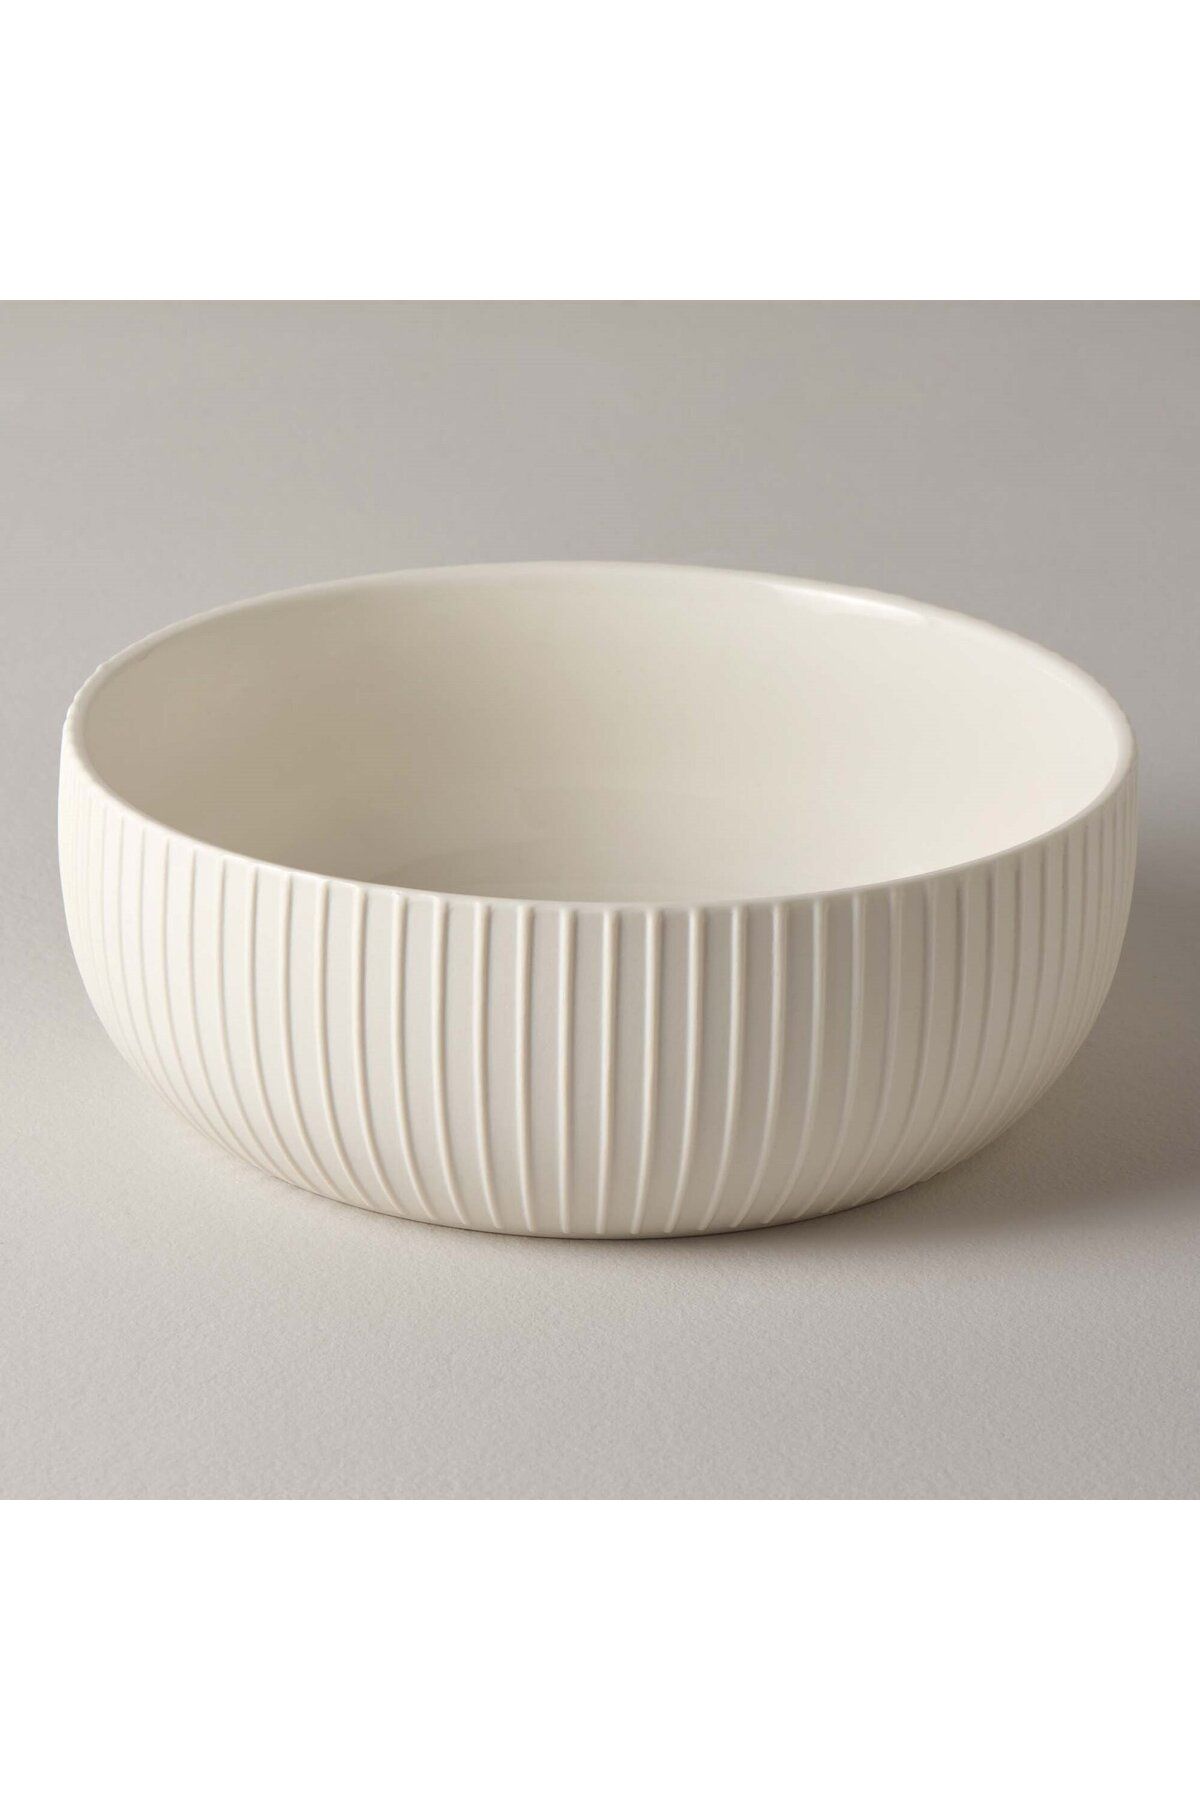 Linens Trend Porselen 22 Cm Kase Beyaz